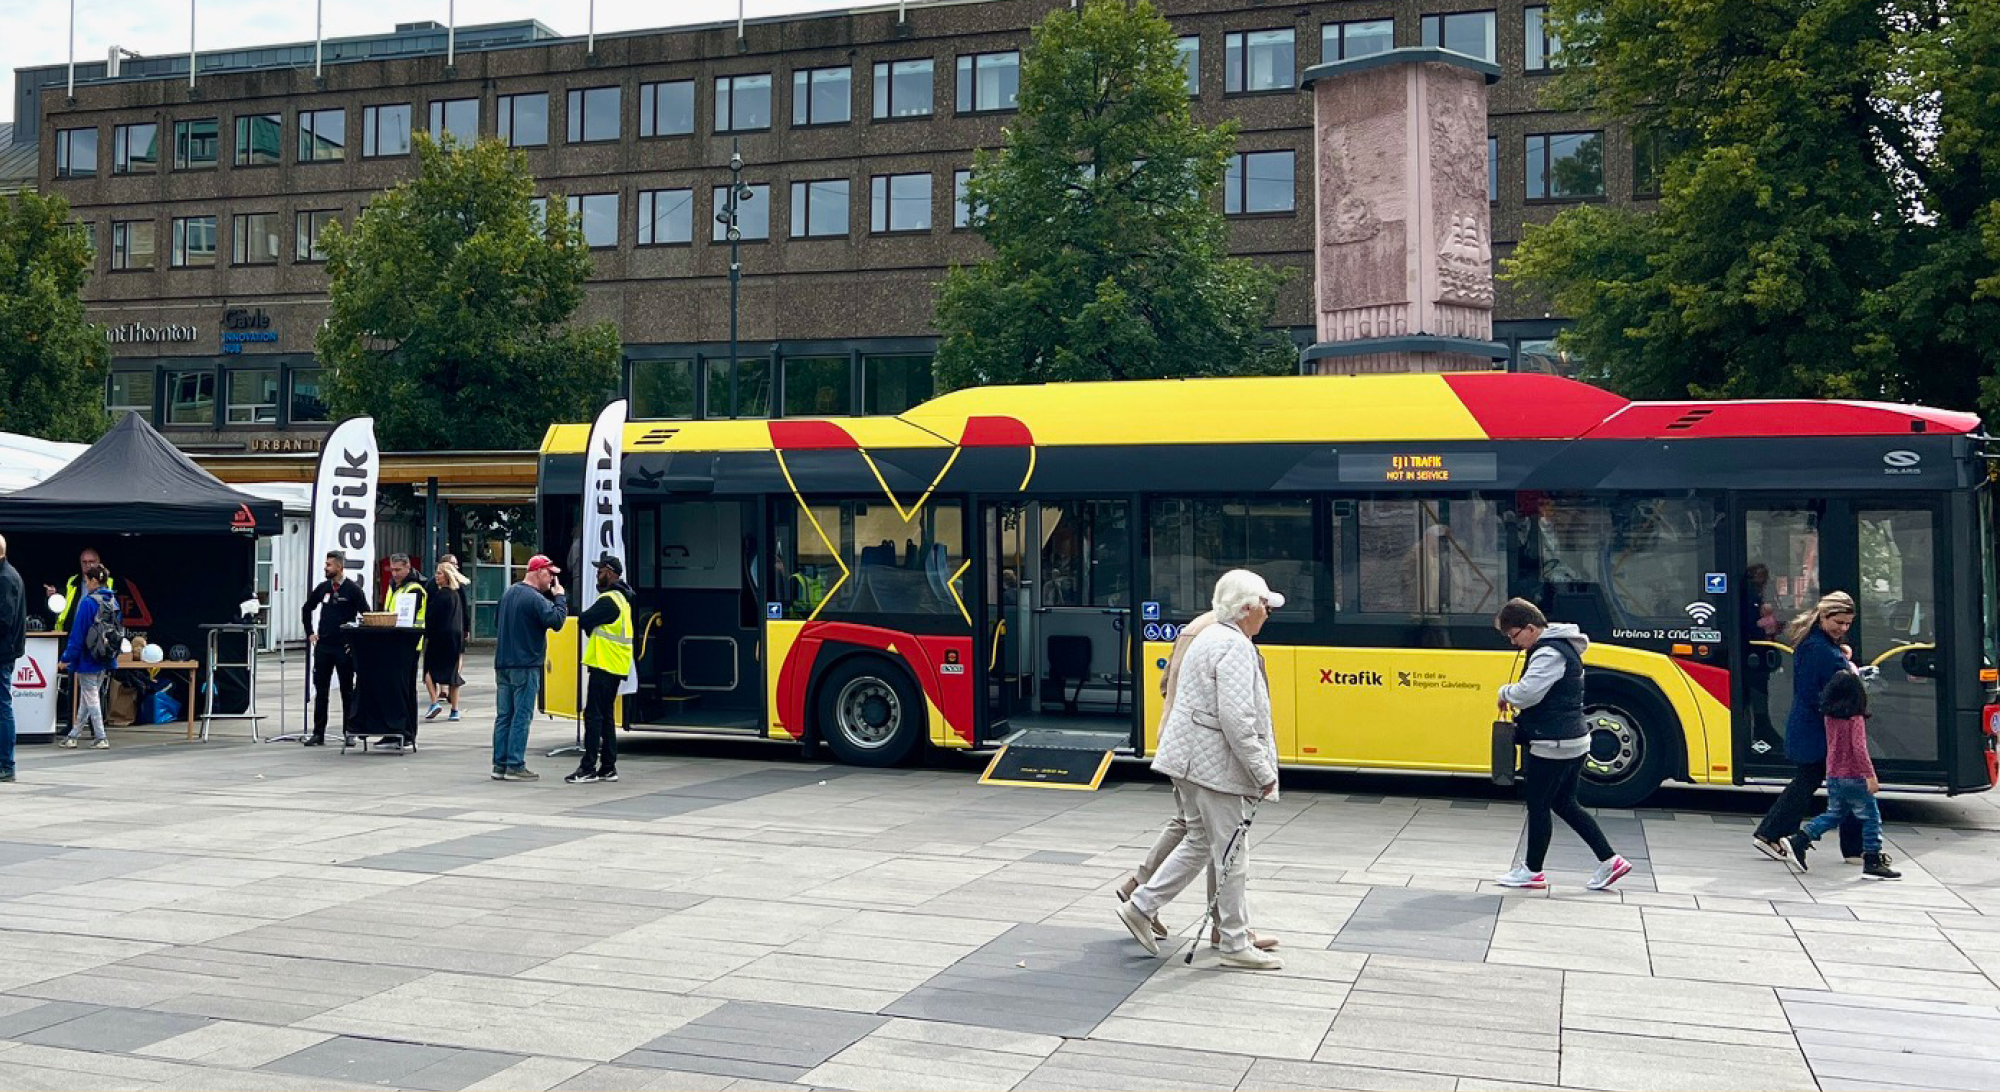 Prova på kollektivtrafiken i Gävle!